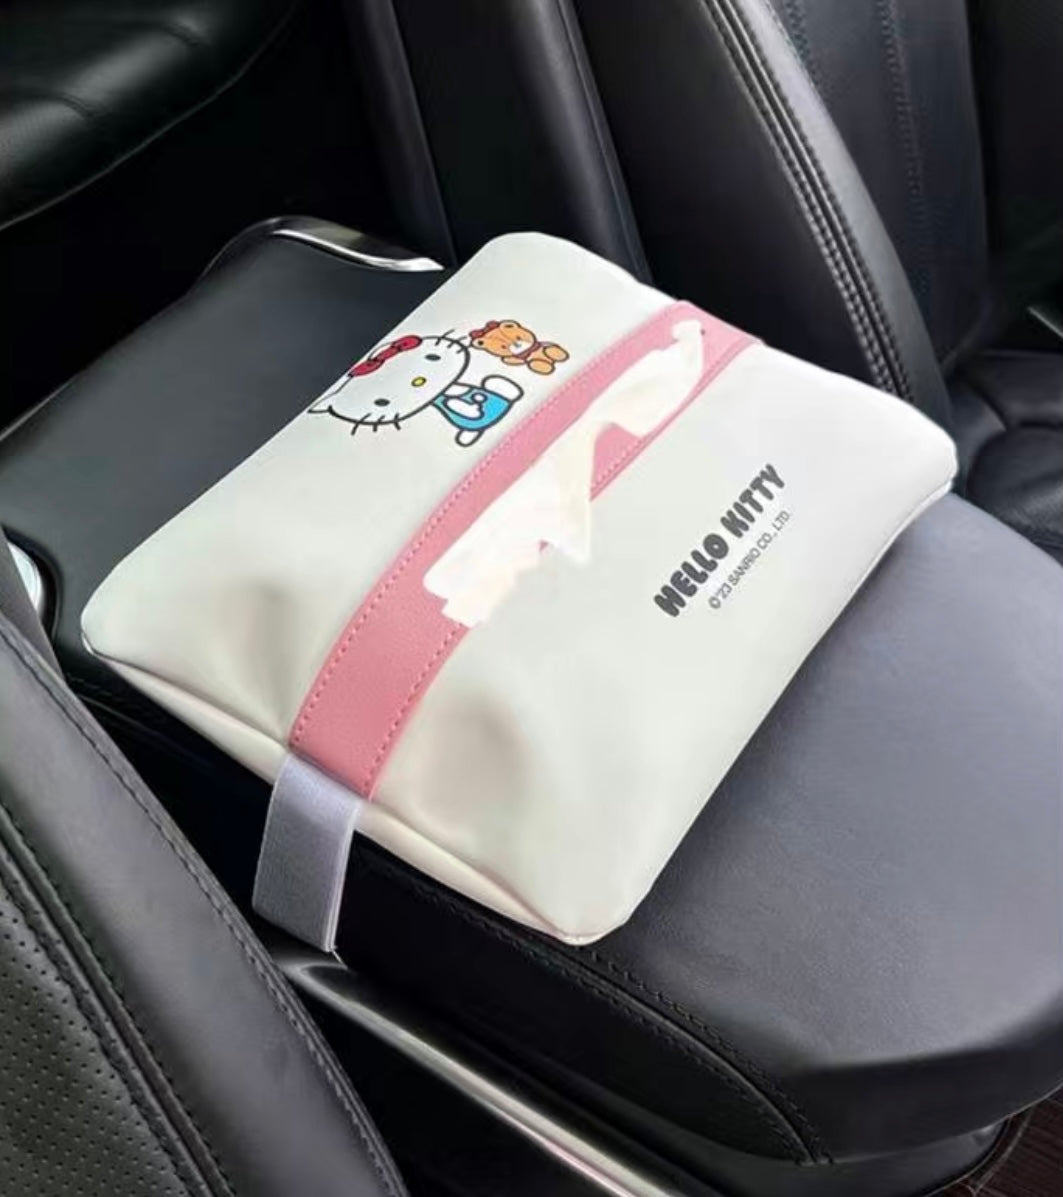 Hello Kitty Car Leatherette Tissue Holder